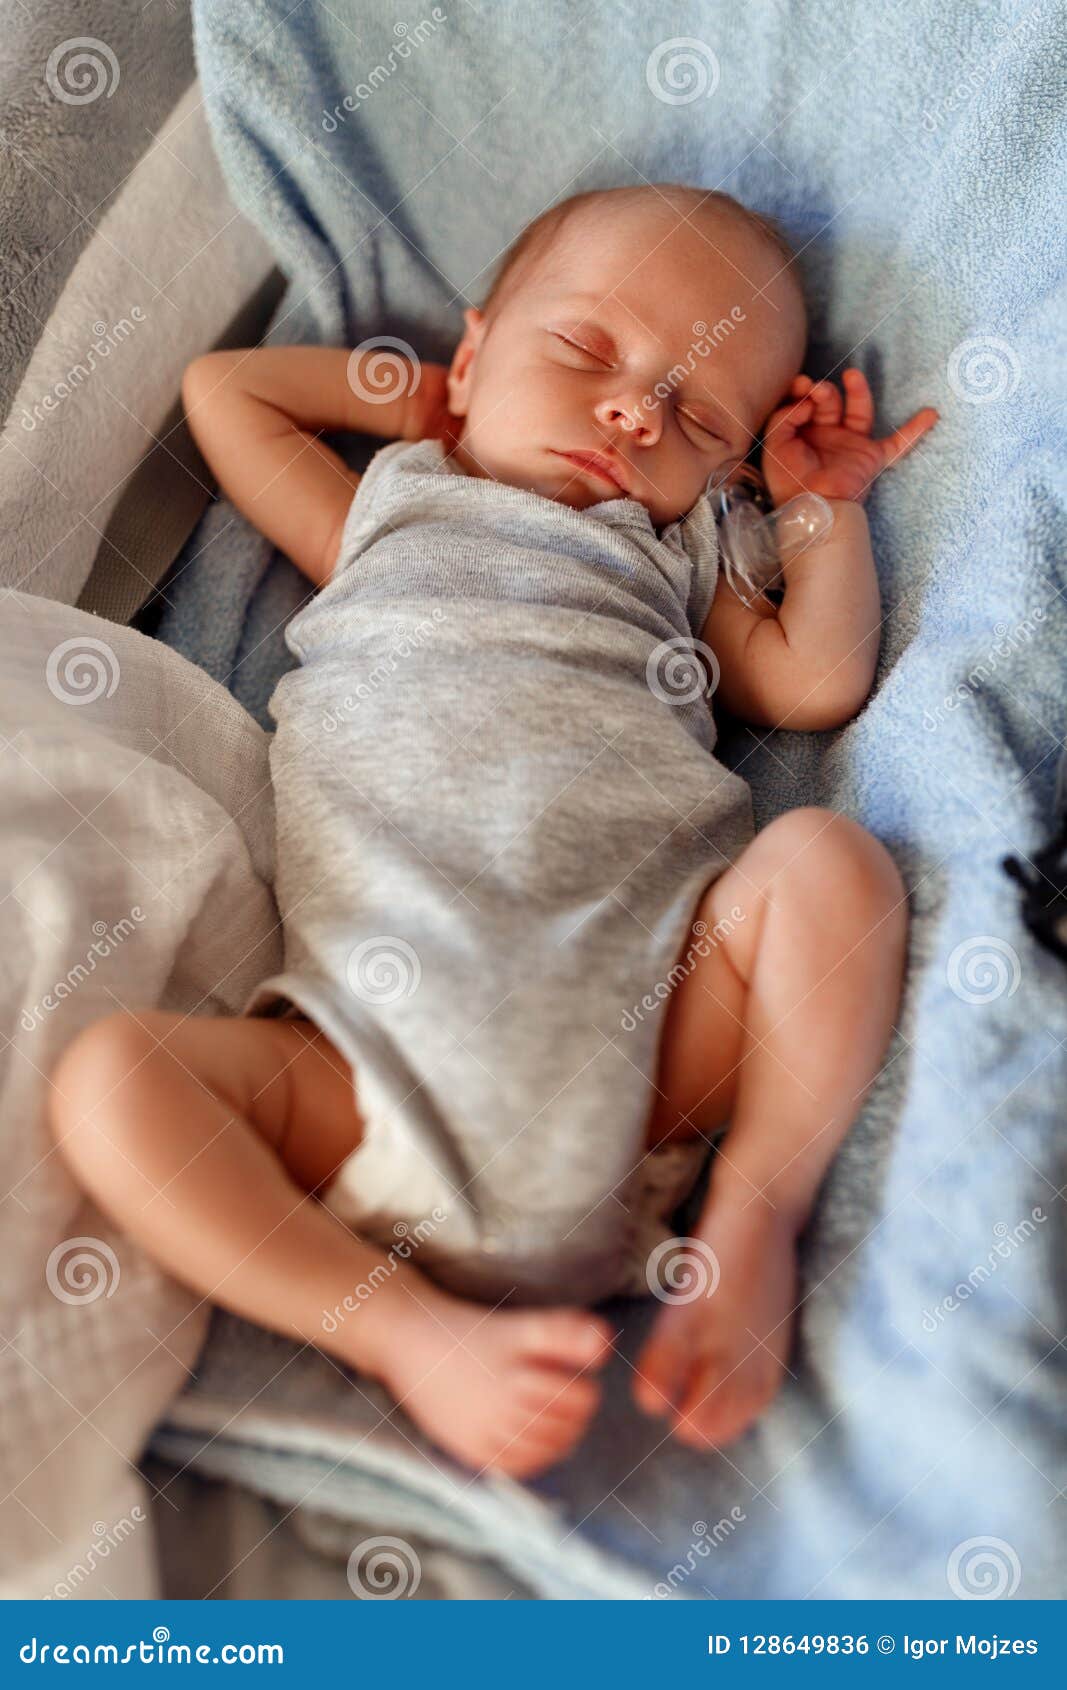 newborn sleeping in bouncer